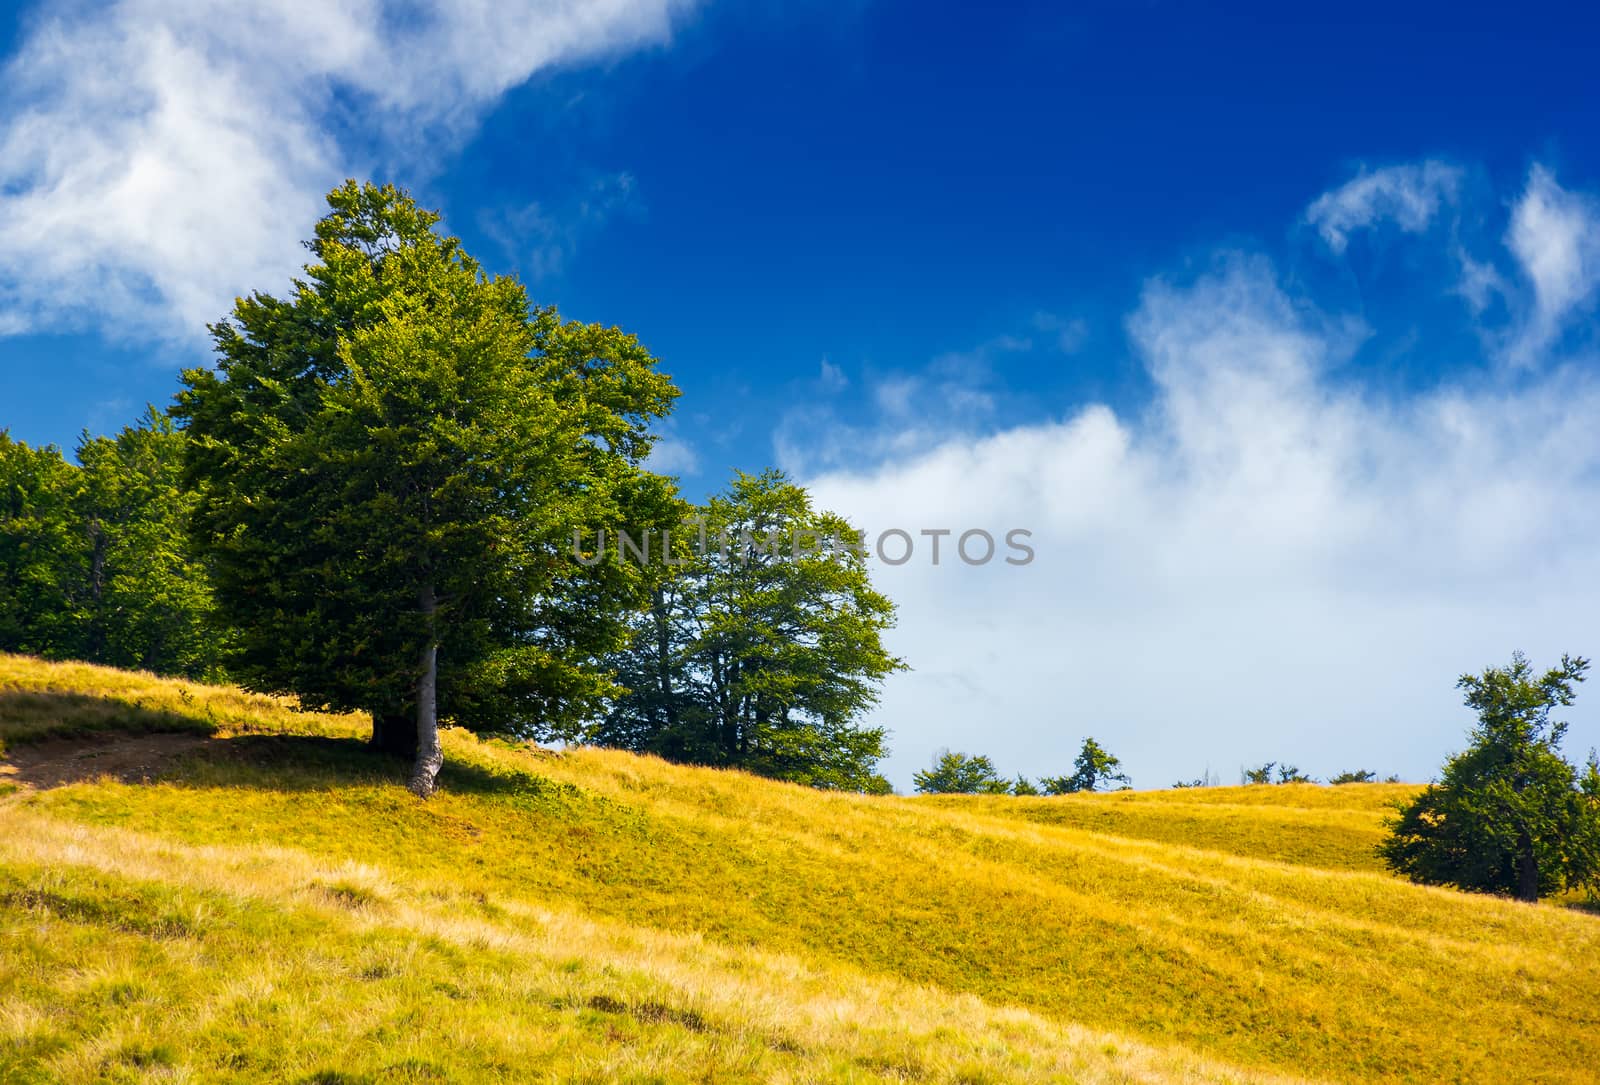 trees on a grassy hillside in summer. lovely nature scenery